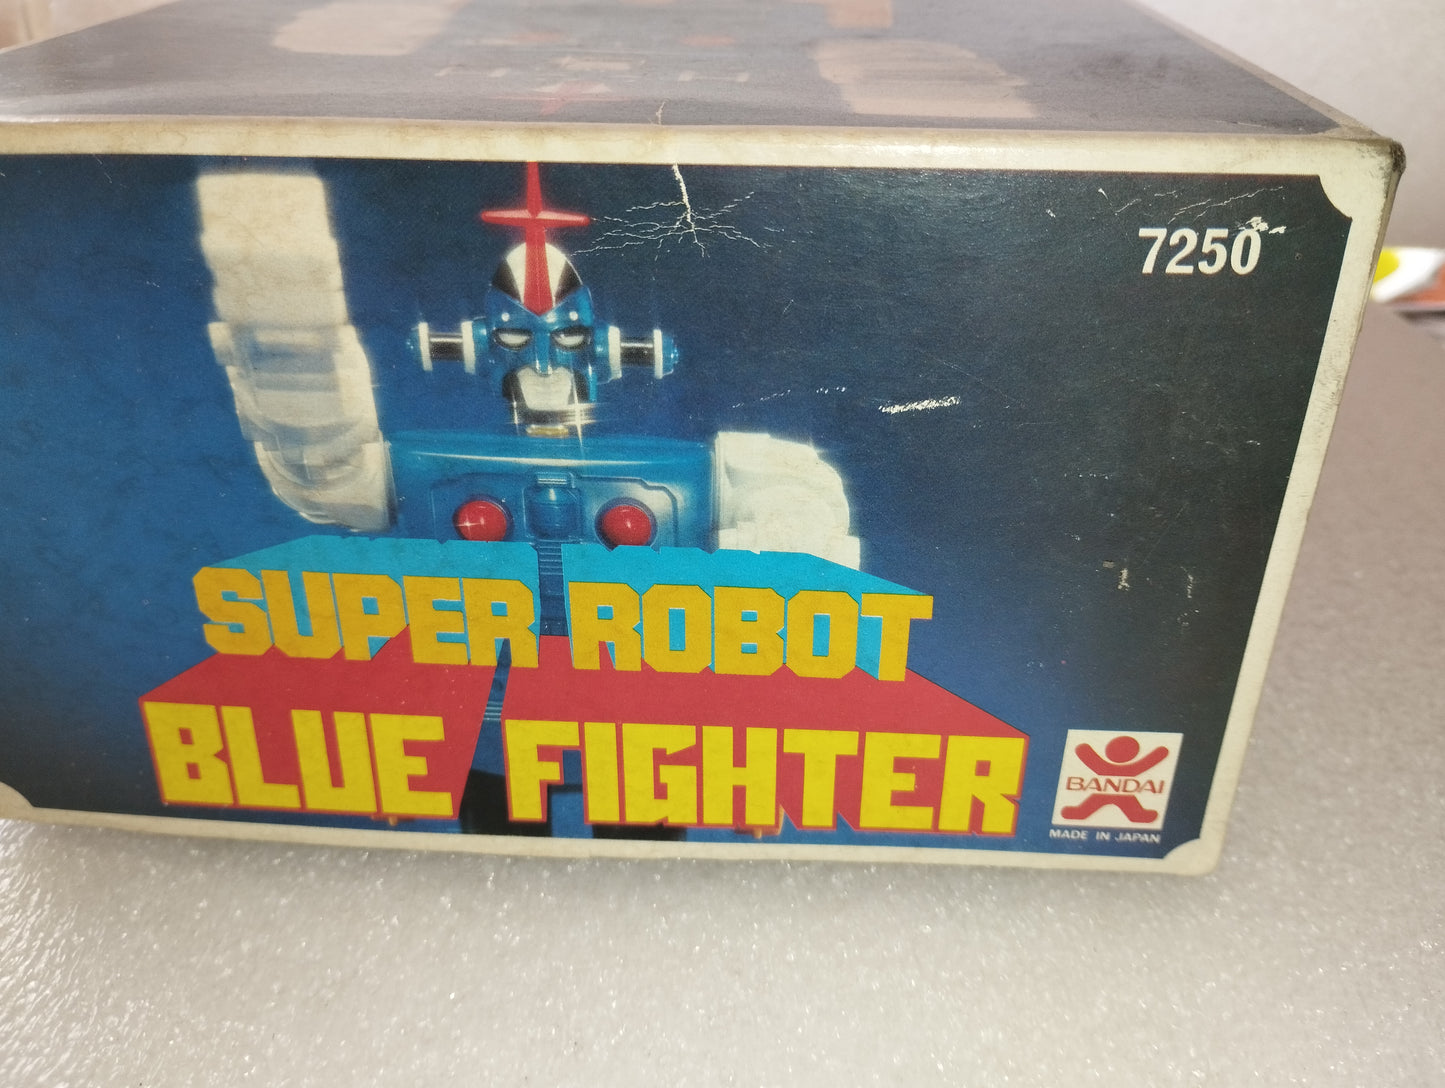 Super Robot Blue Fighter Bandai
Made in Japan
Anni 80 da revisionare